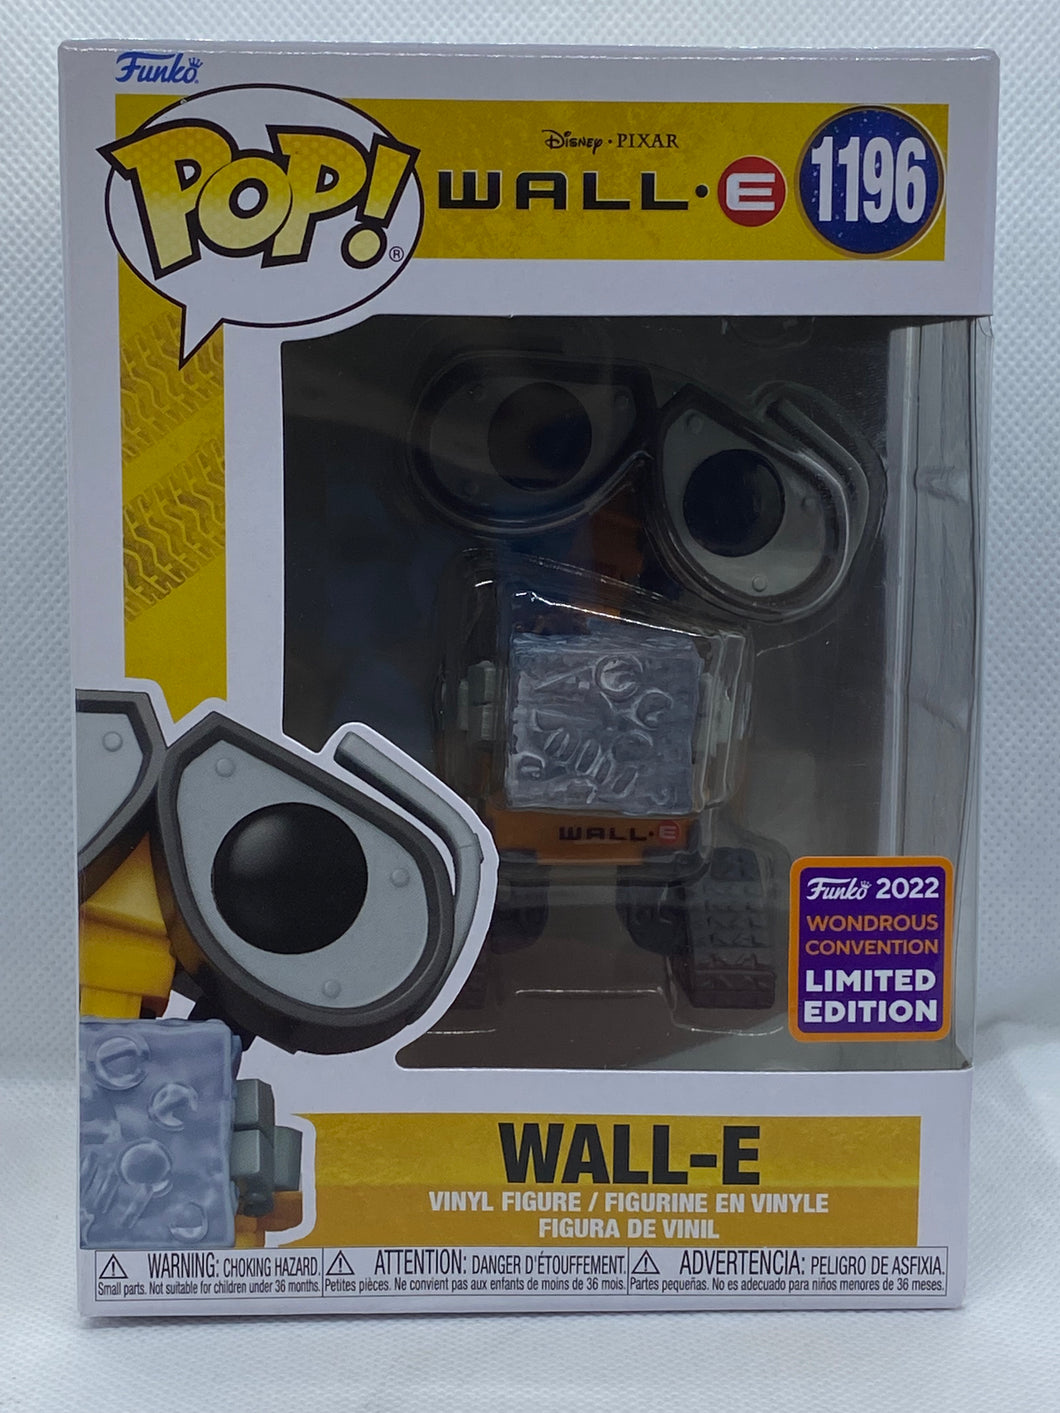 Wall-e 1196 Wall-e 2022 Wondrous Convention Limited Edition Funko Pop